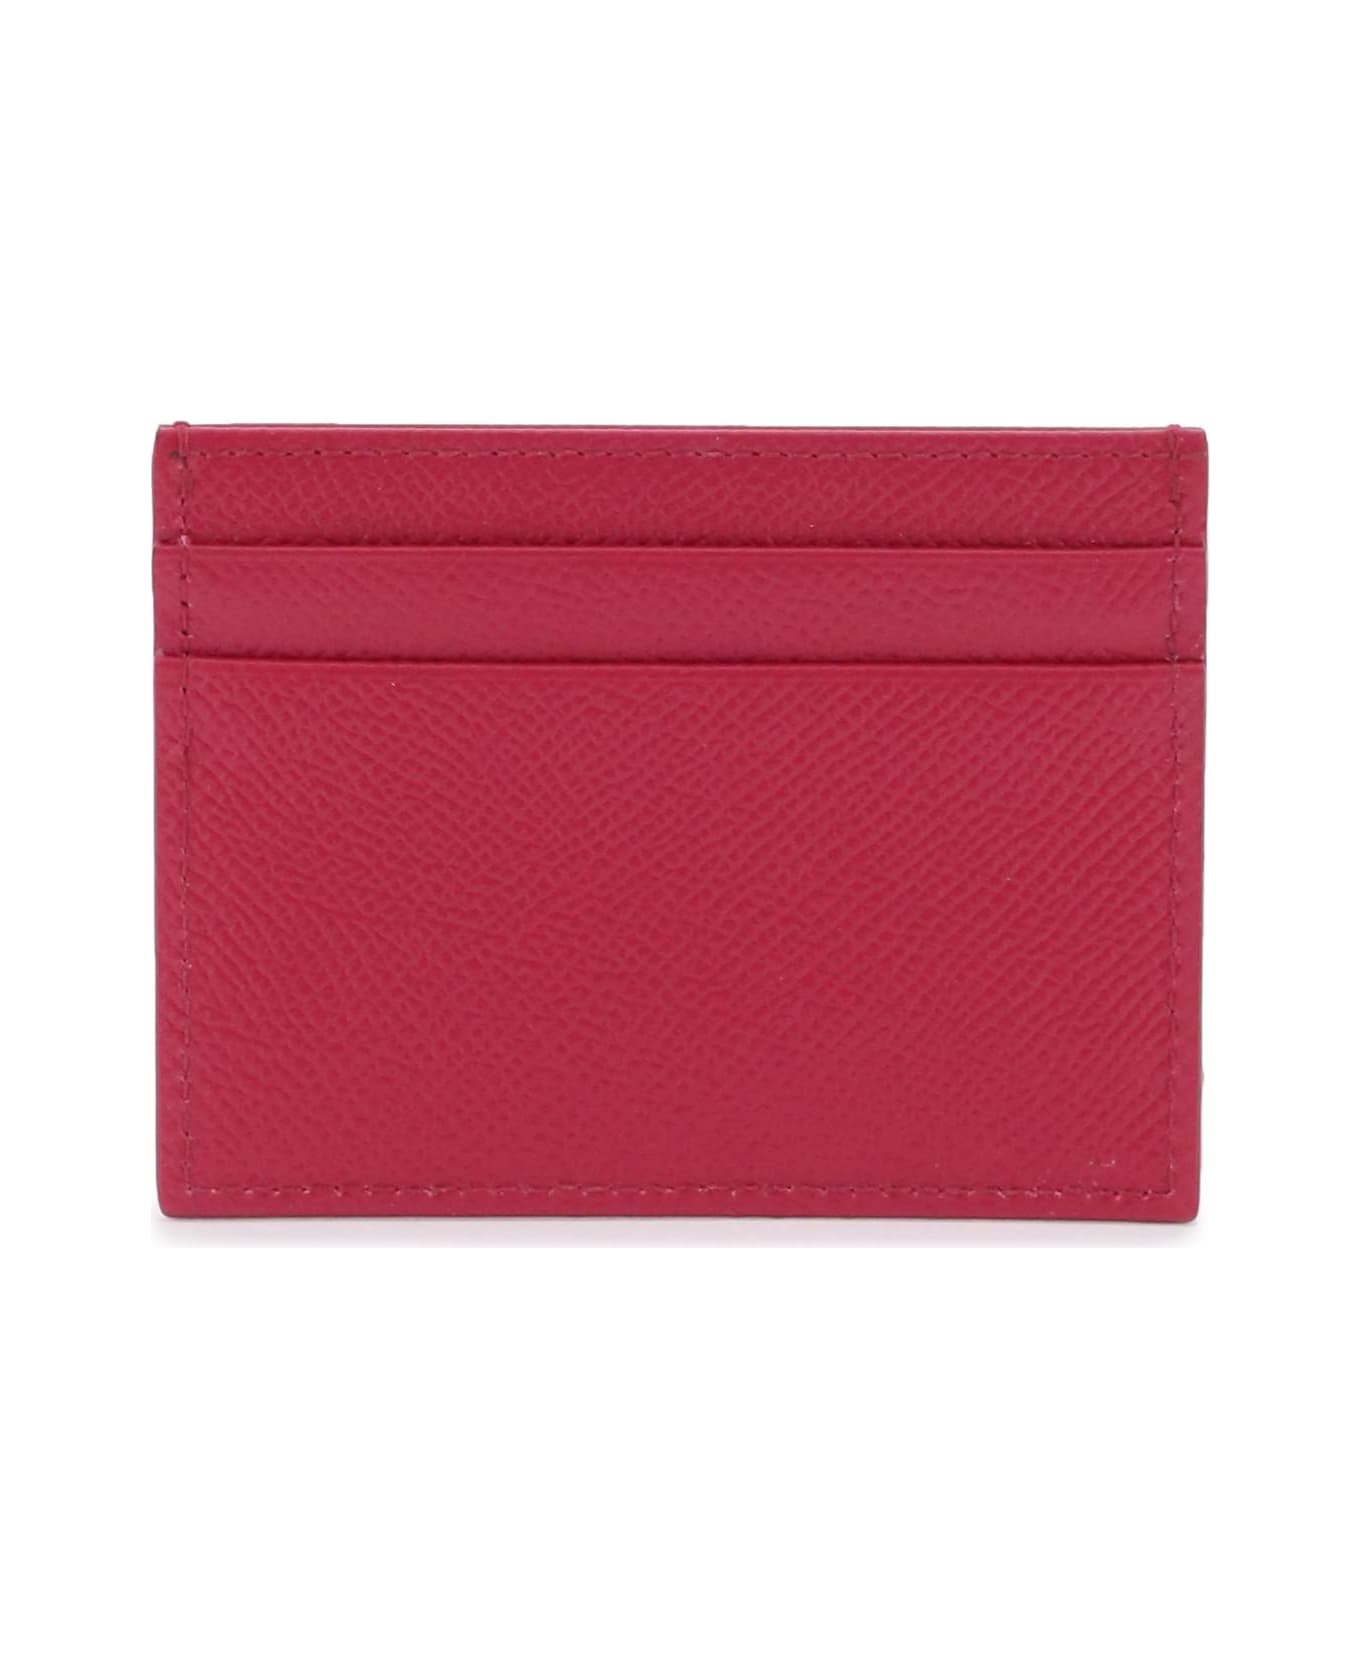 Dolce & Gabbana Dauphine Leather Card Holder - Pink